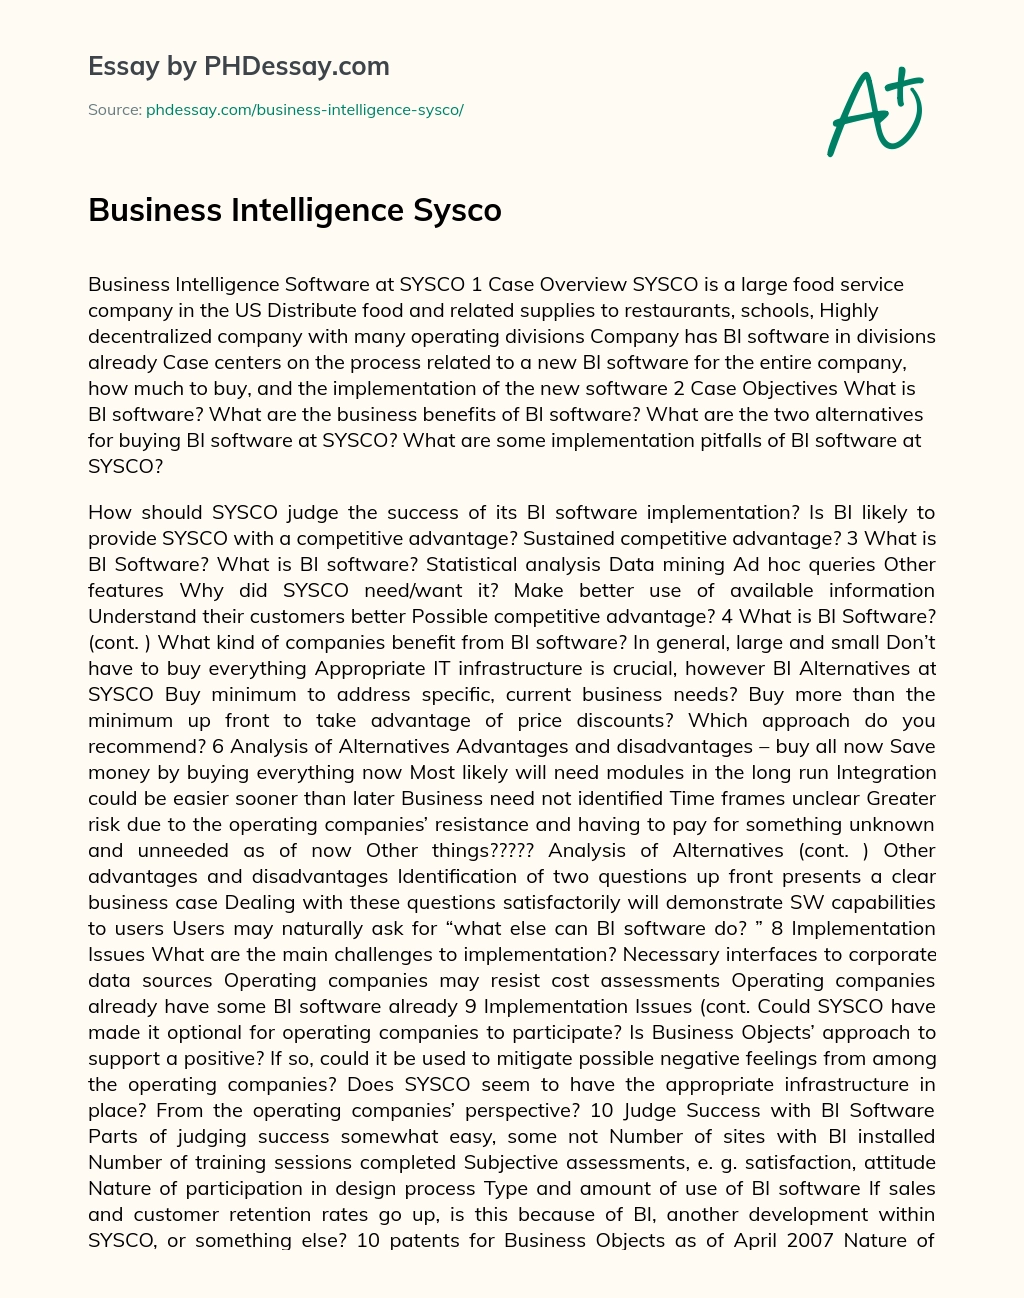 Business Intelligence Sysco essay